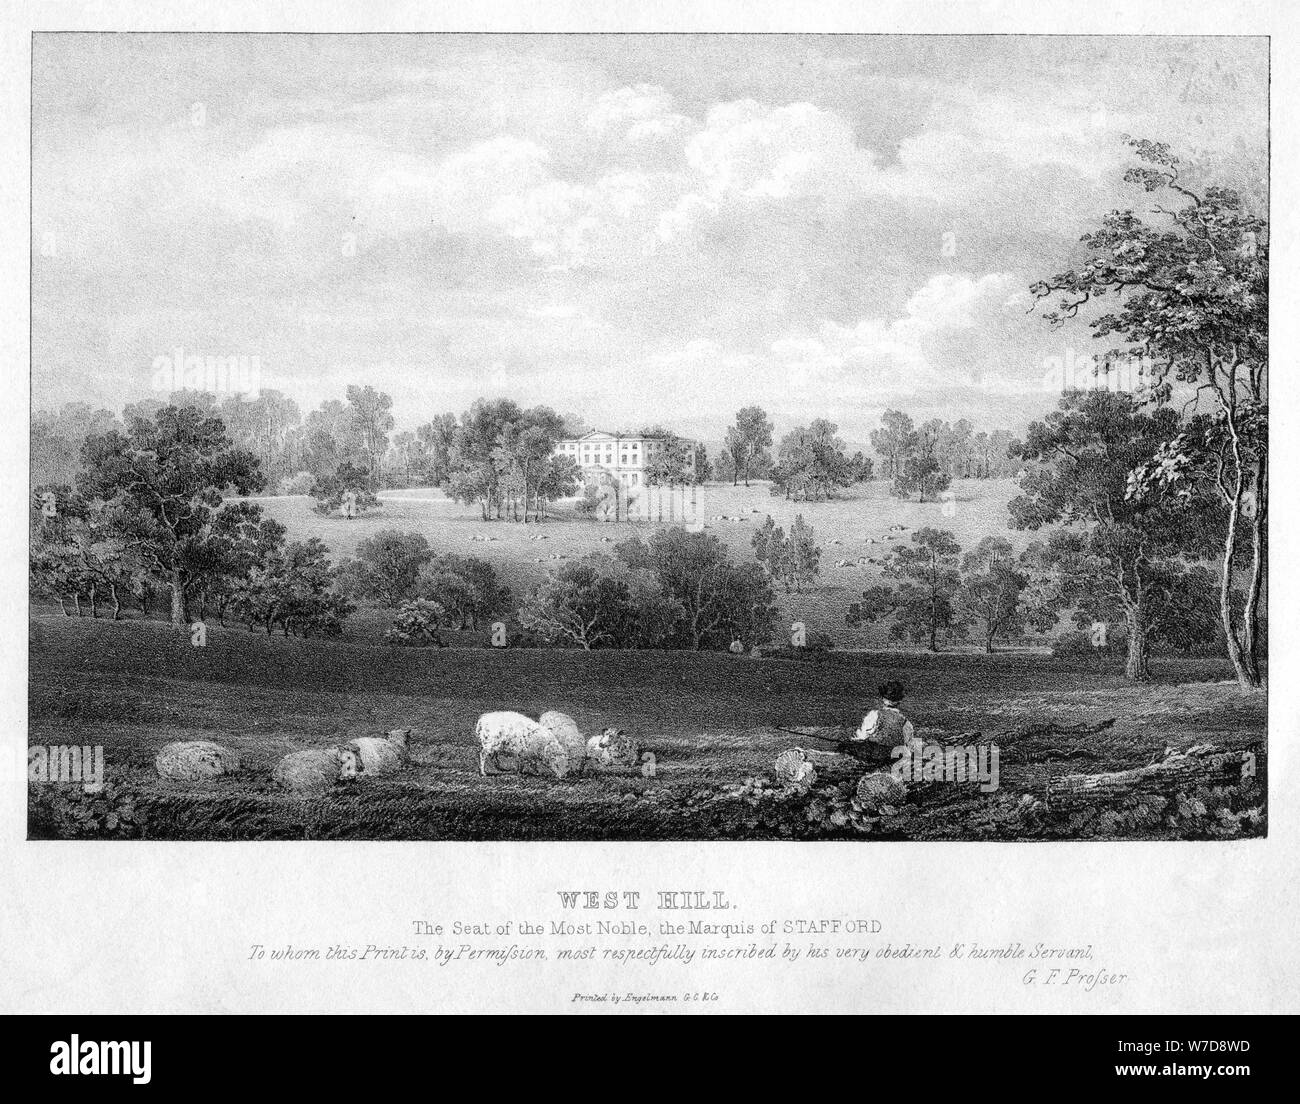 West Hill, near Wandsworth, London, 19th century.Artist: George Frederick Prosser Stock Photo